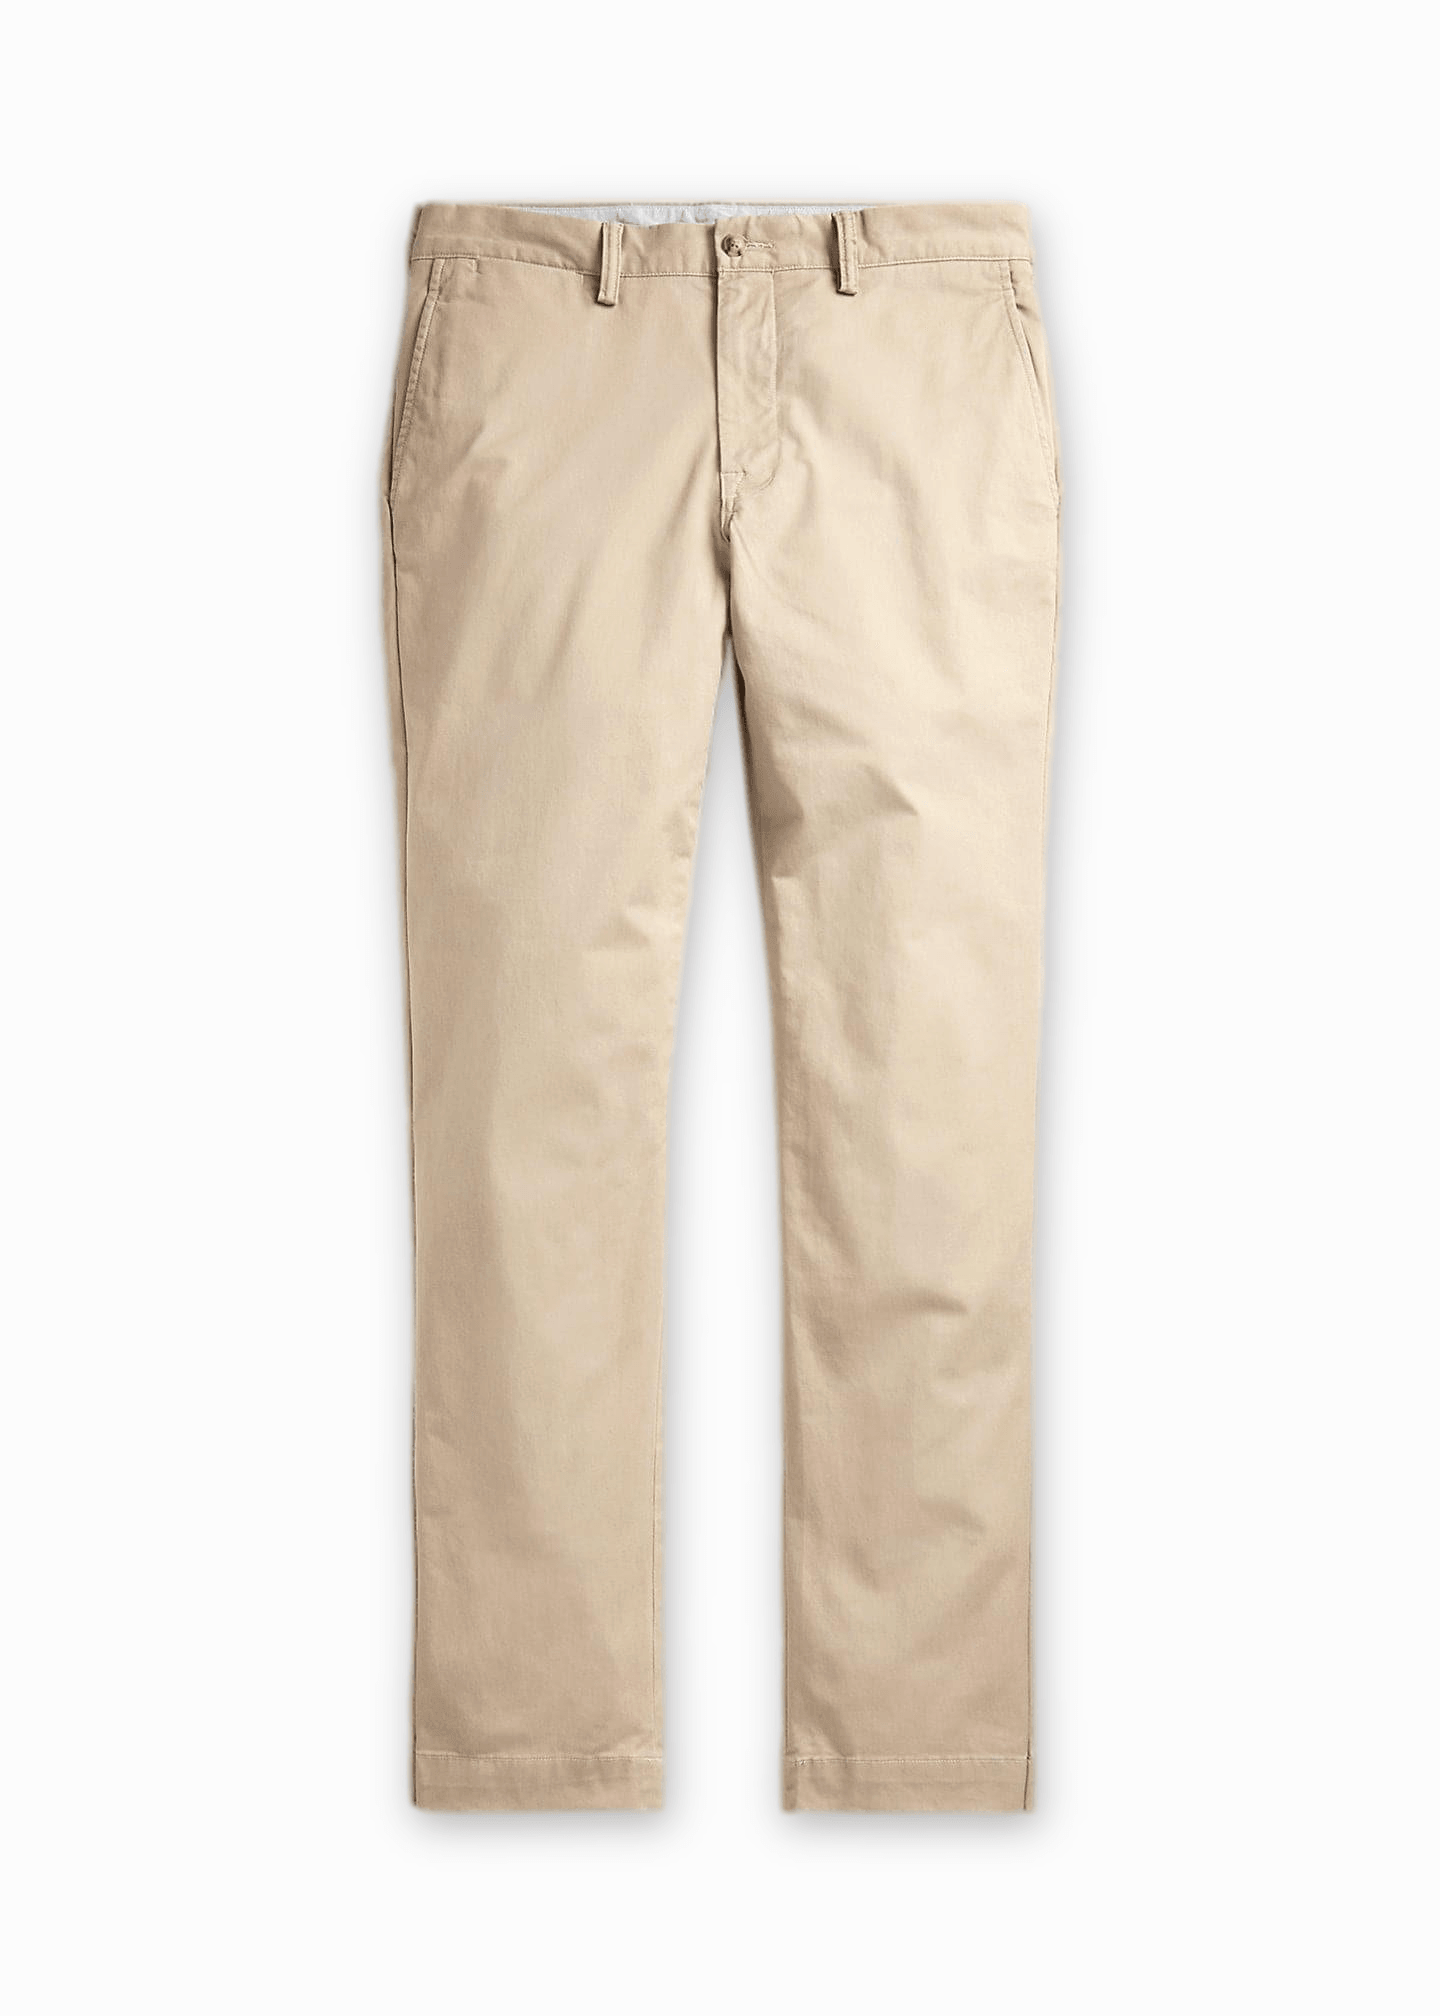 Laflamme- Pantalon de coton chino crême - Ralph lauren